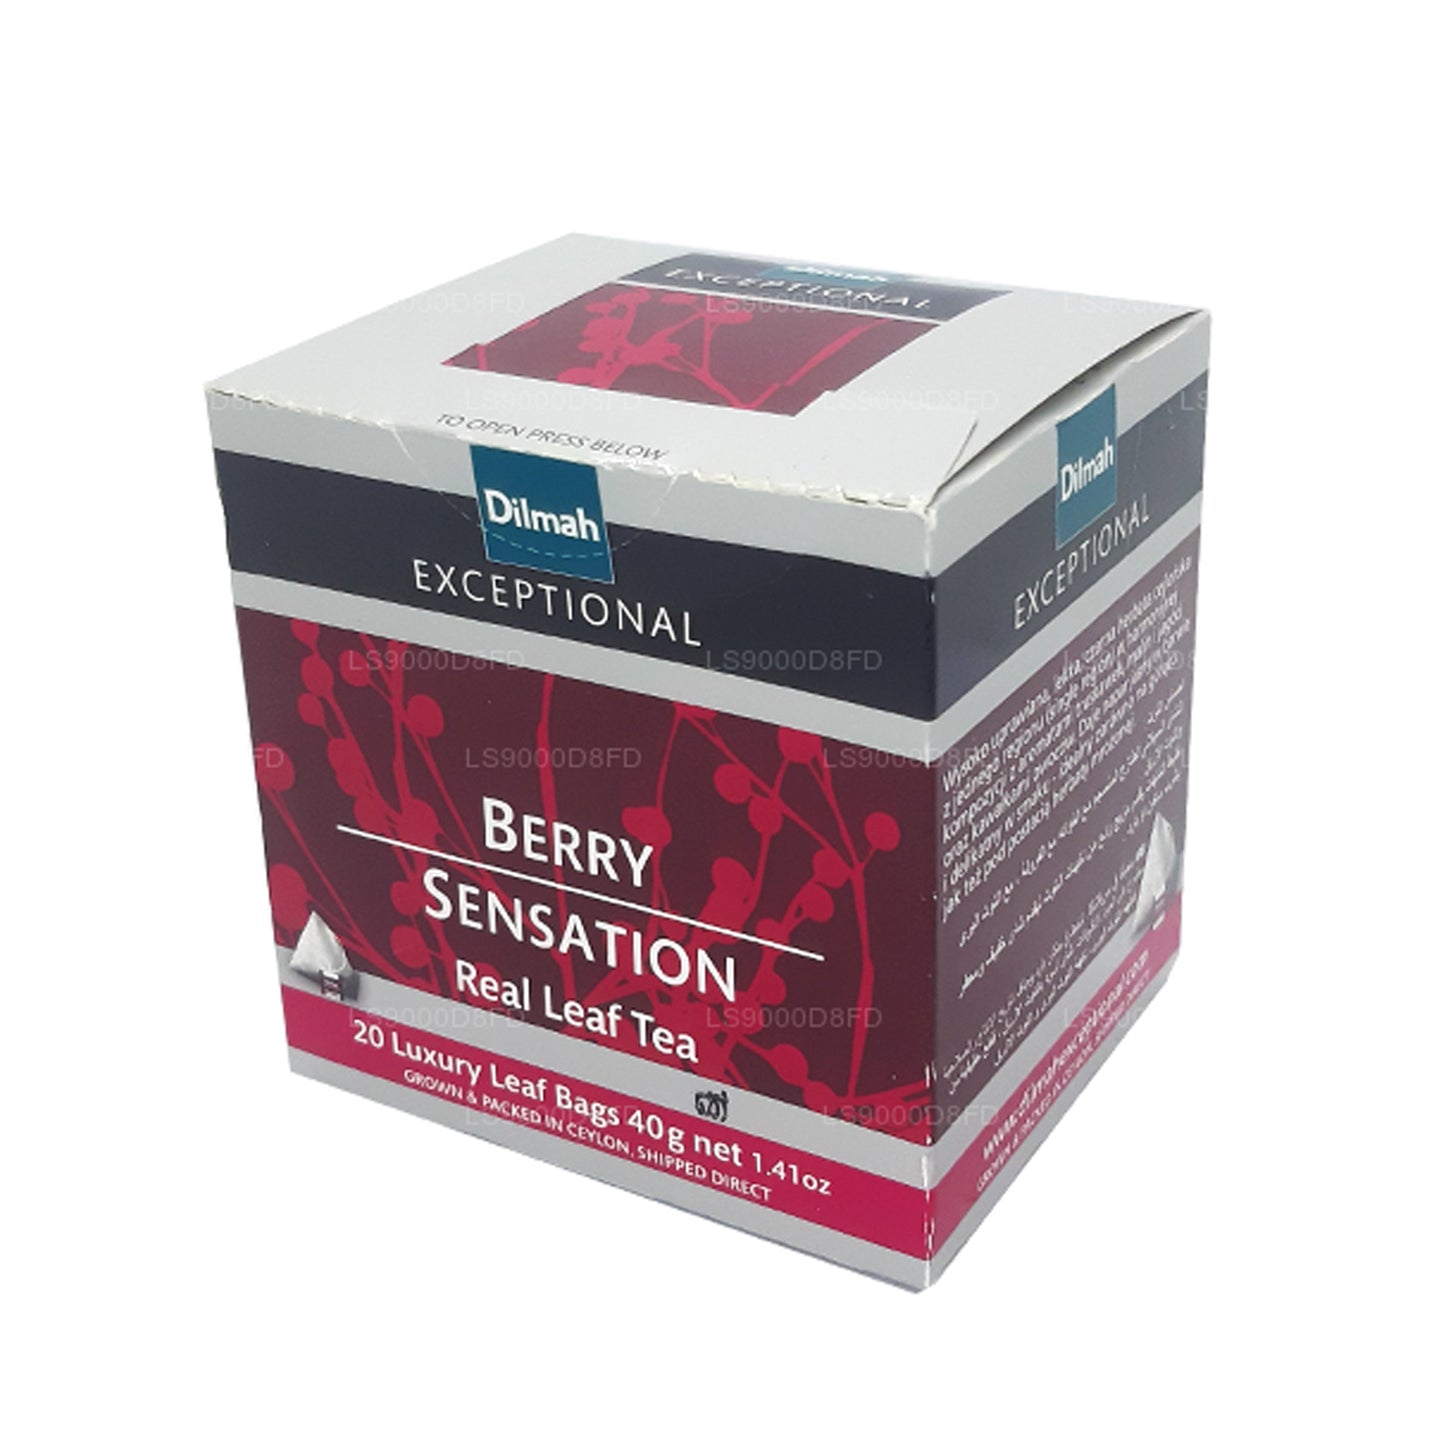 Dilmah Exceptional Berry Sensation Real Leaf Tea (40g) 20 Tea Bags